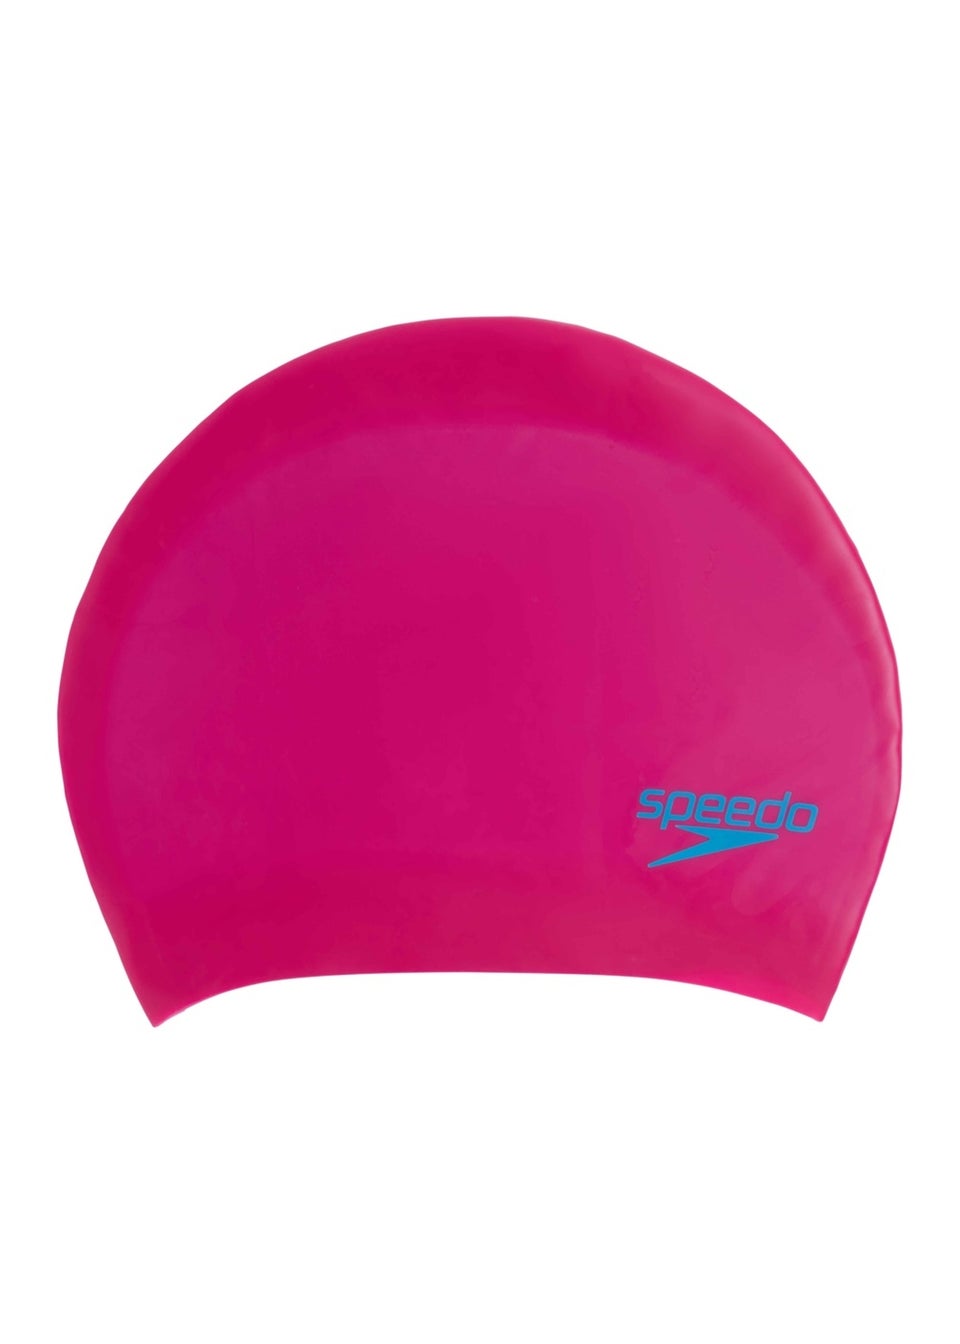 Speedo Kids Pink Silicone Swim Cap